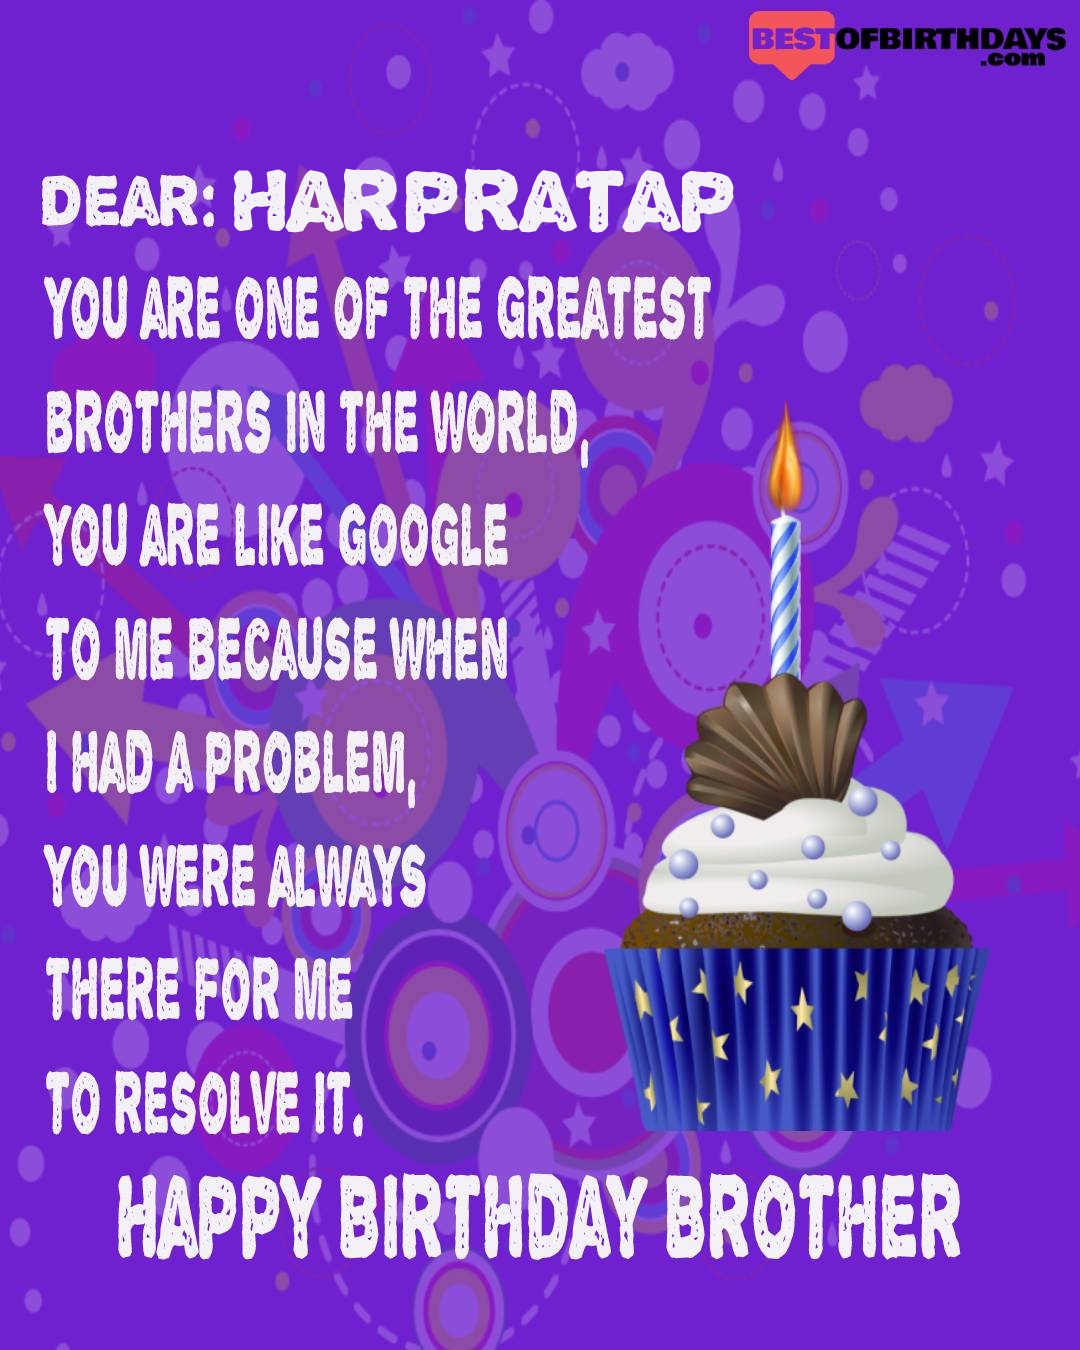 Happy birthday harpratap bhai brother bro